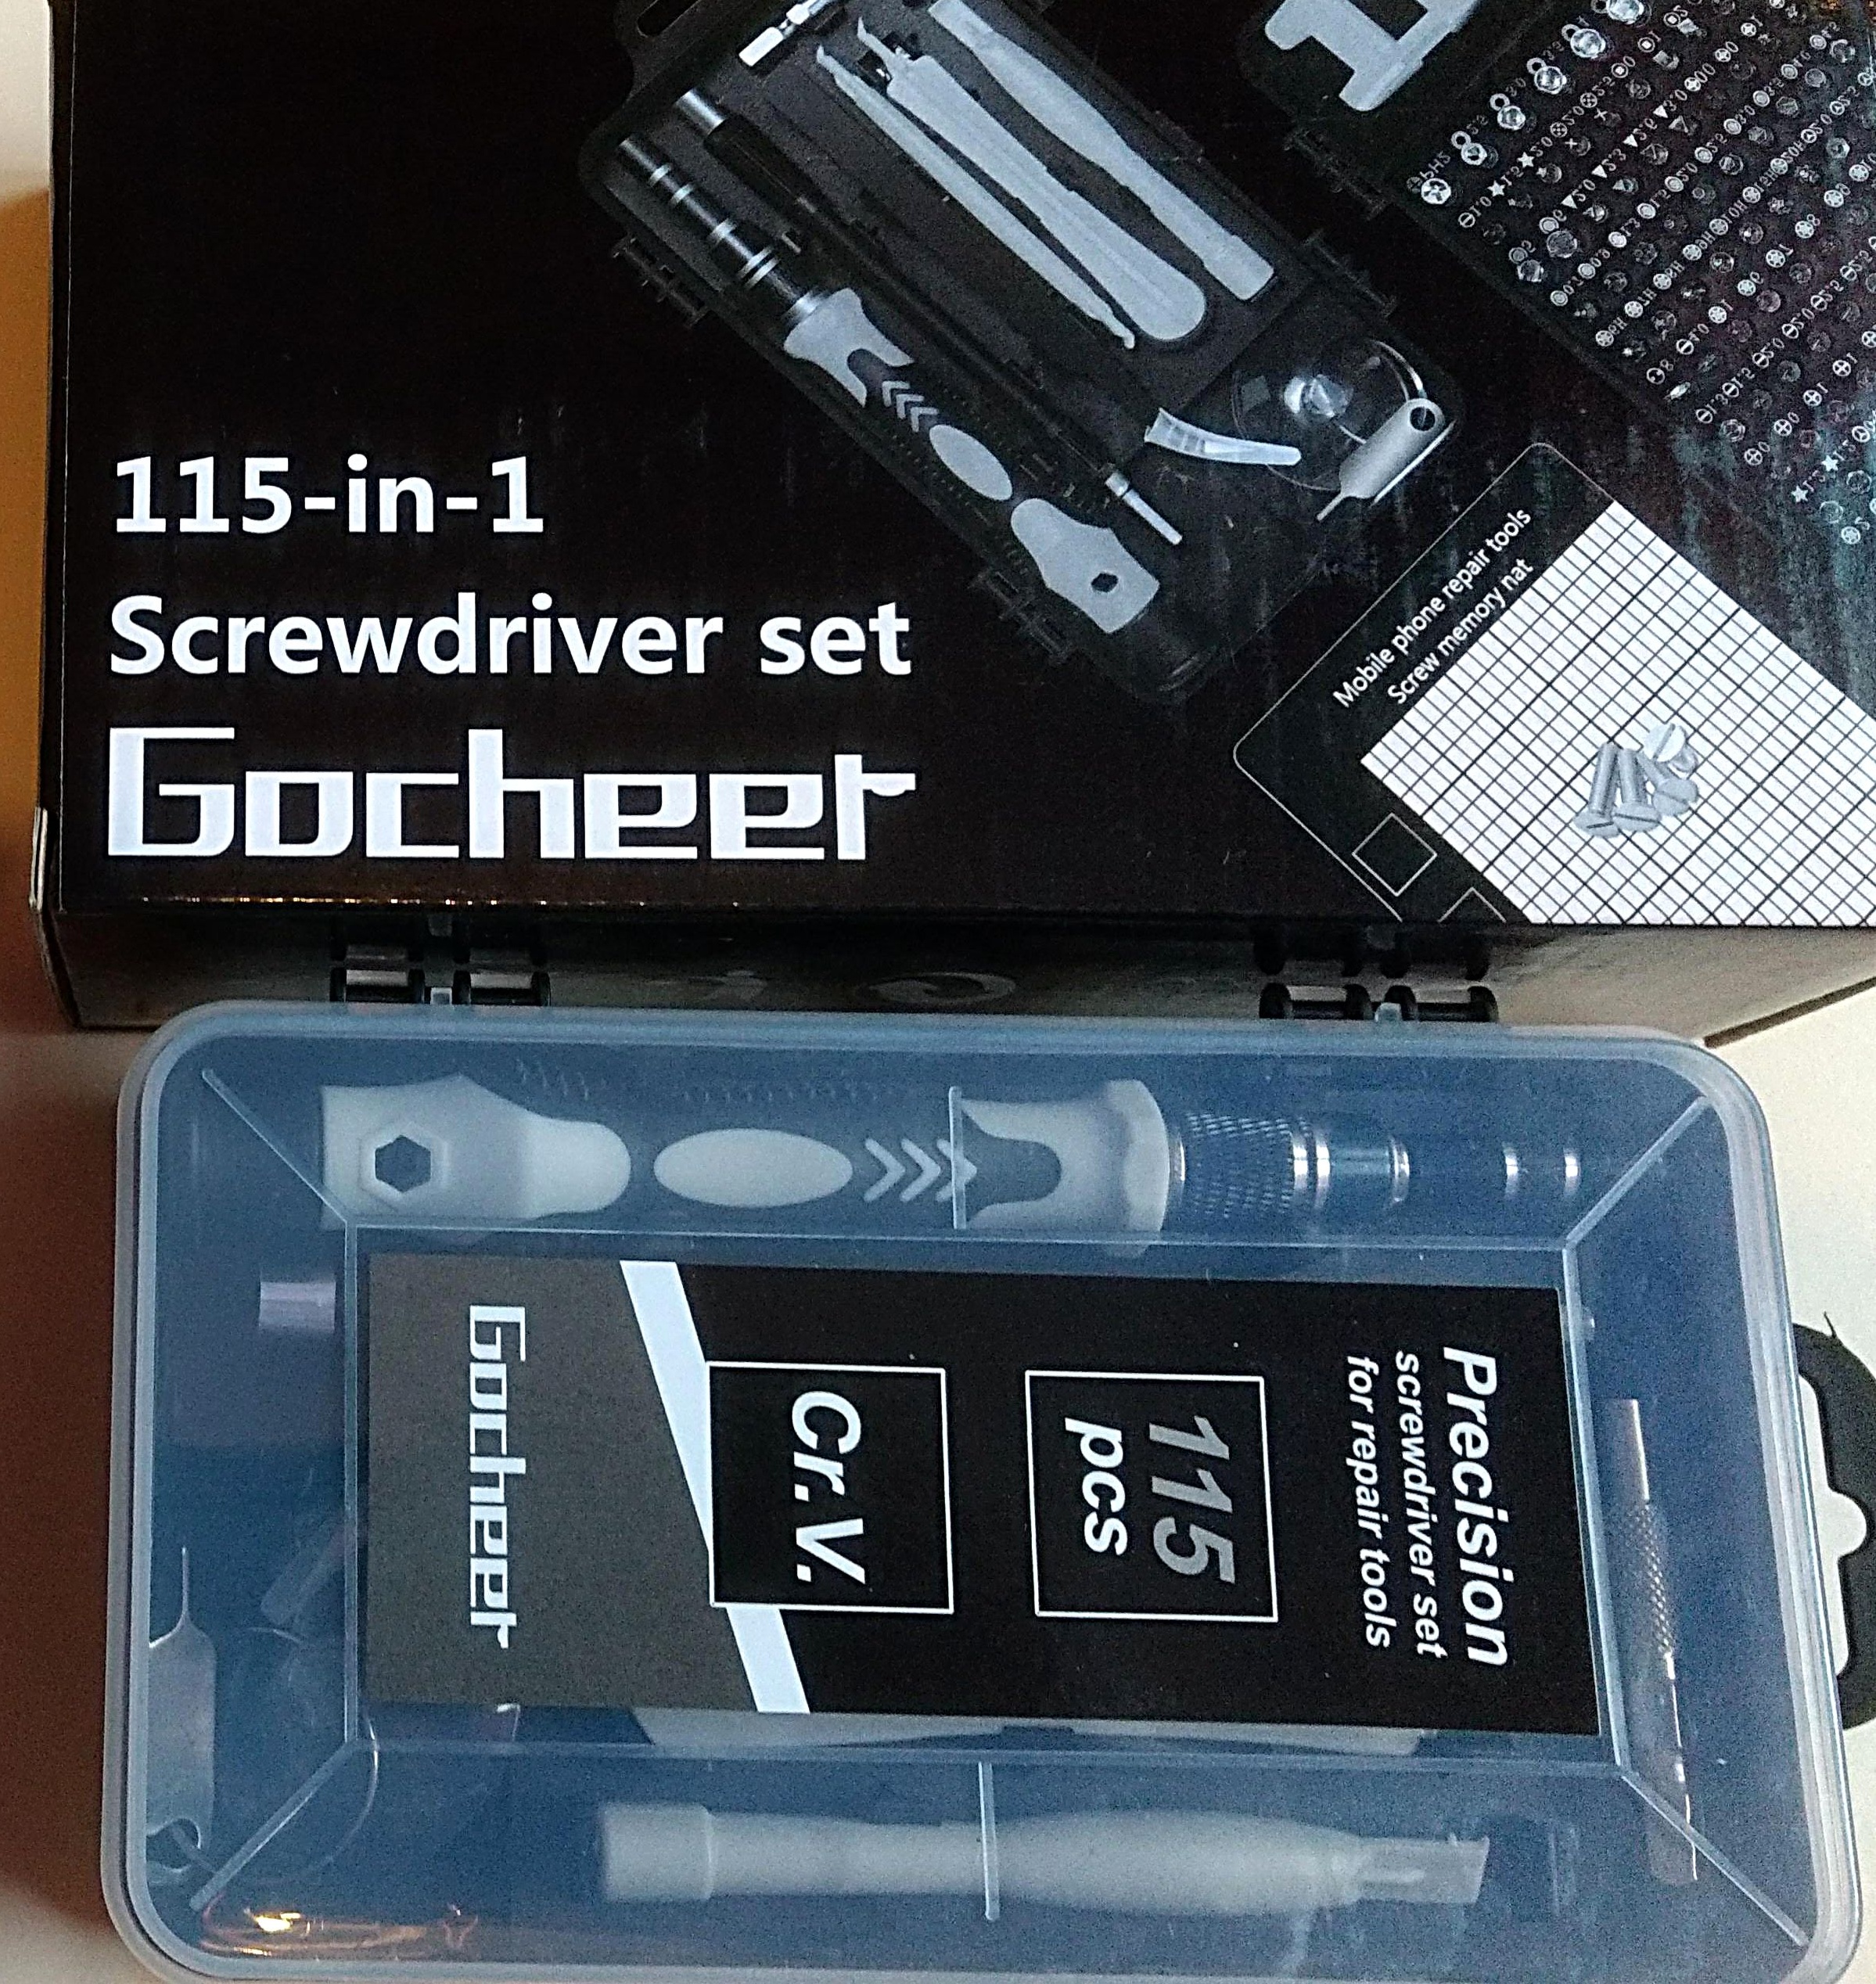 A Very Useful Precision Screwdriver Kit